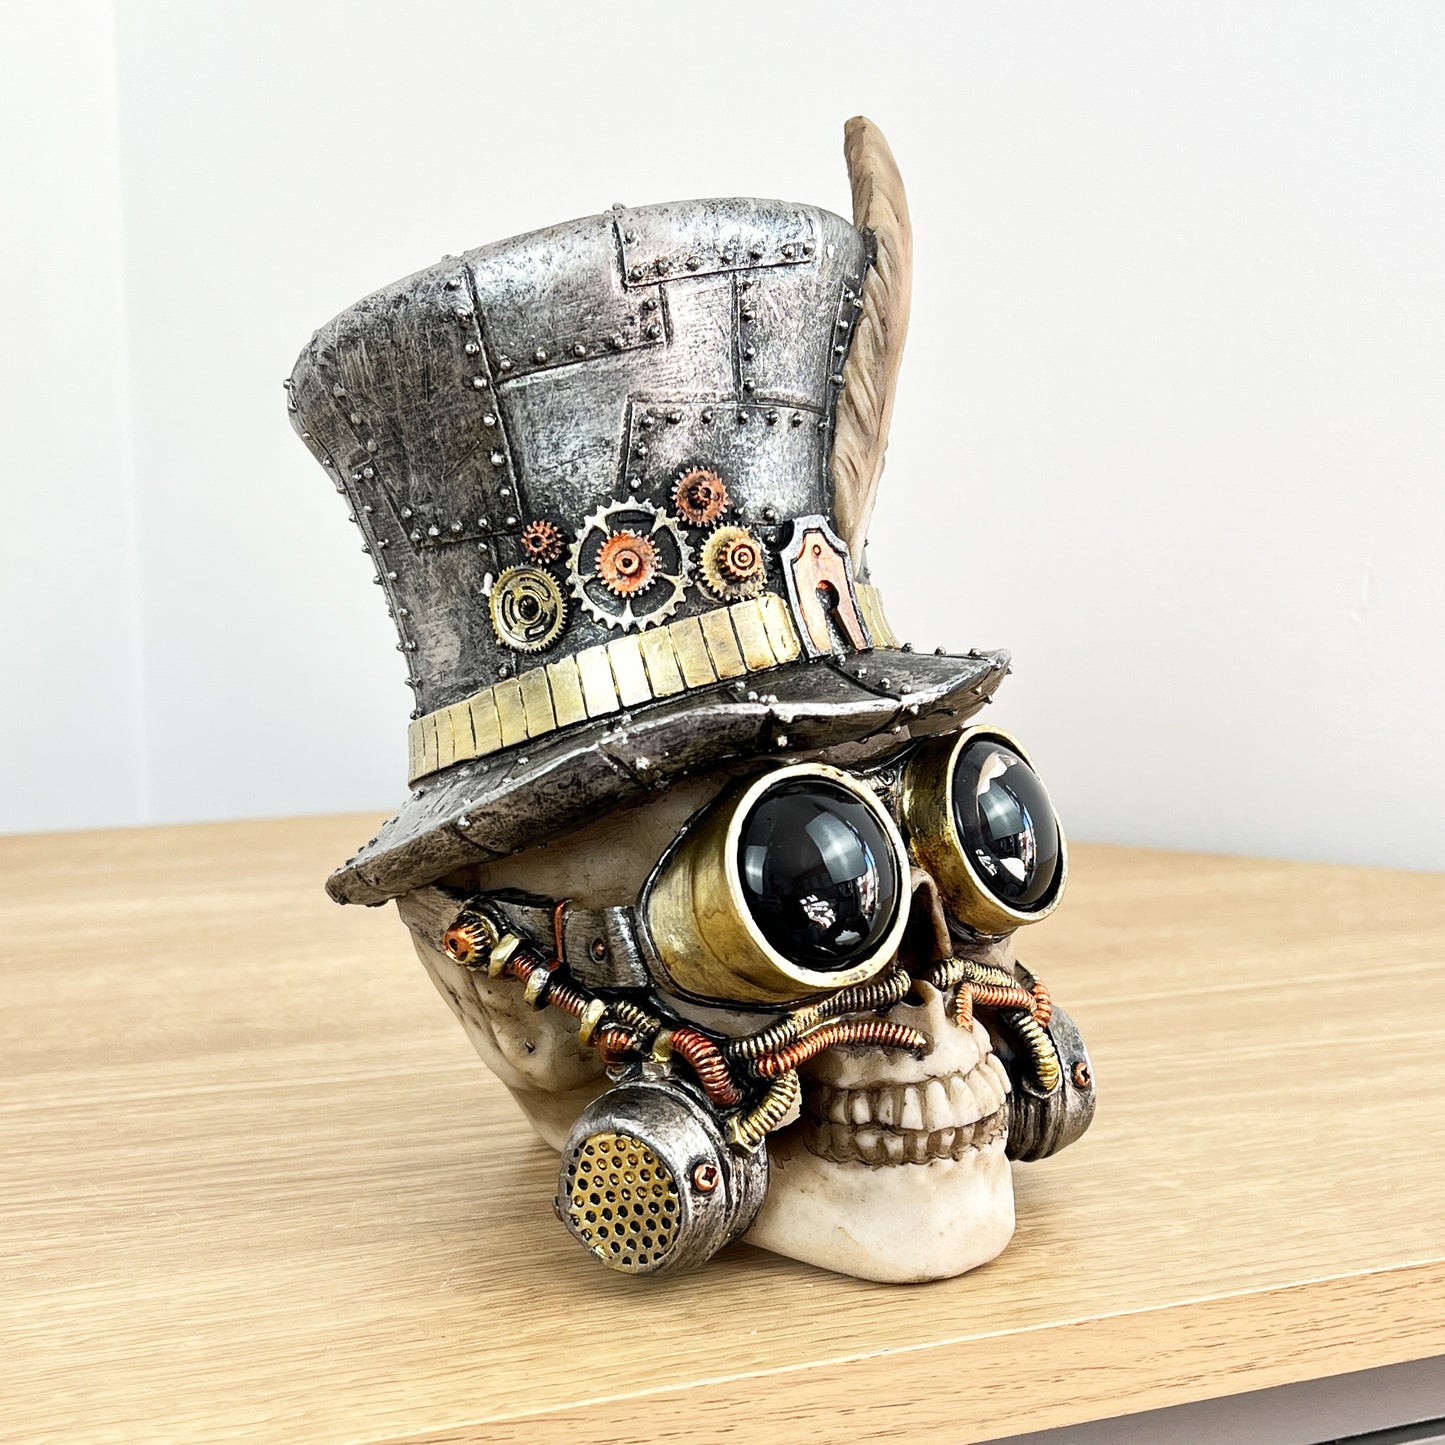 19.5cm Steampunk Skull Ornament - Resin